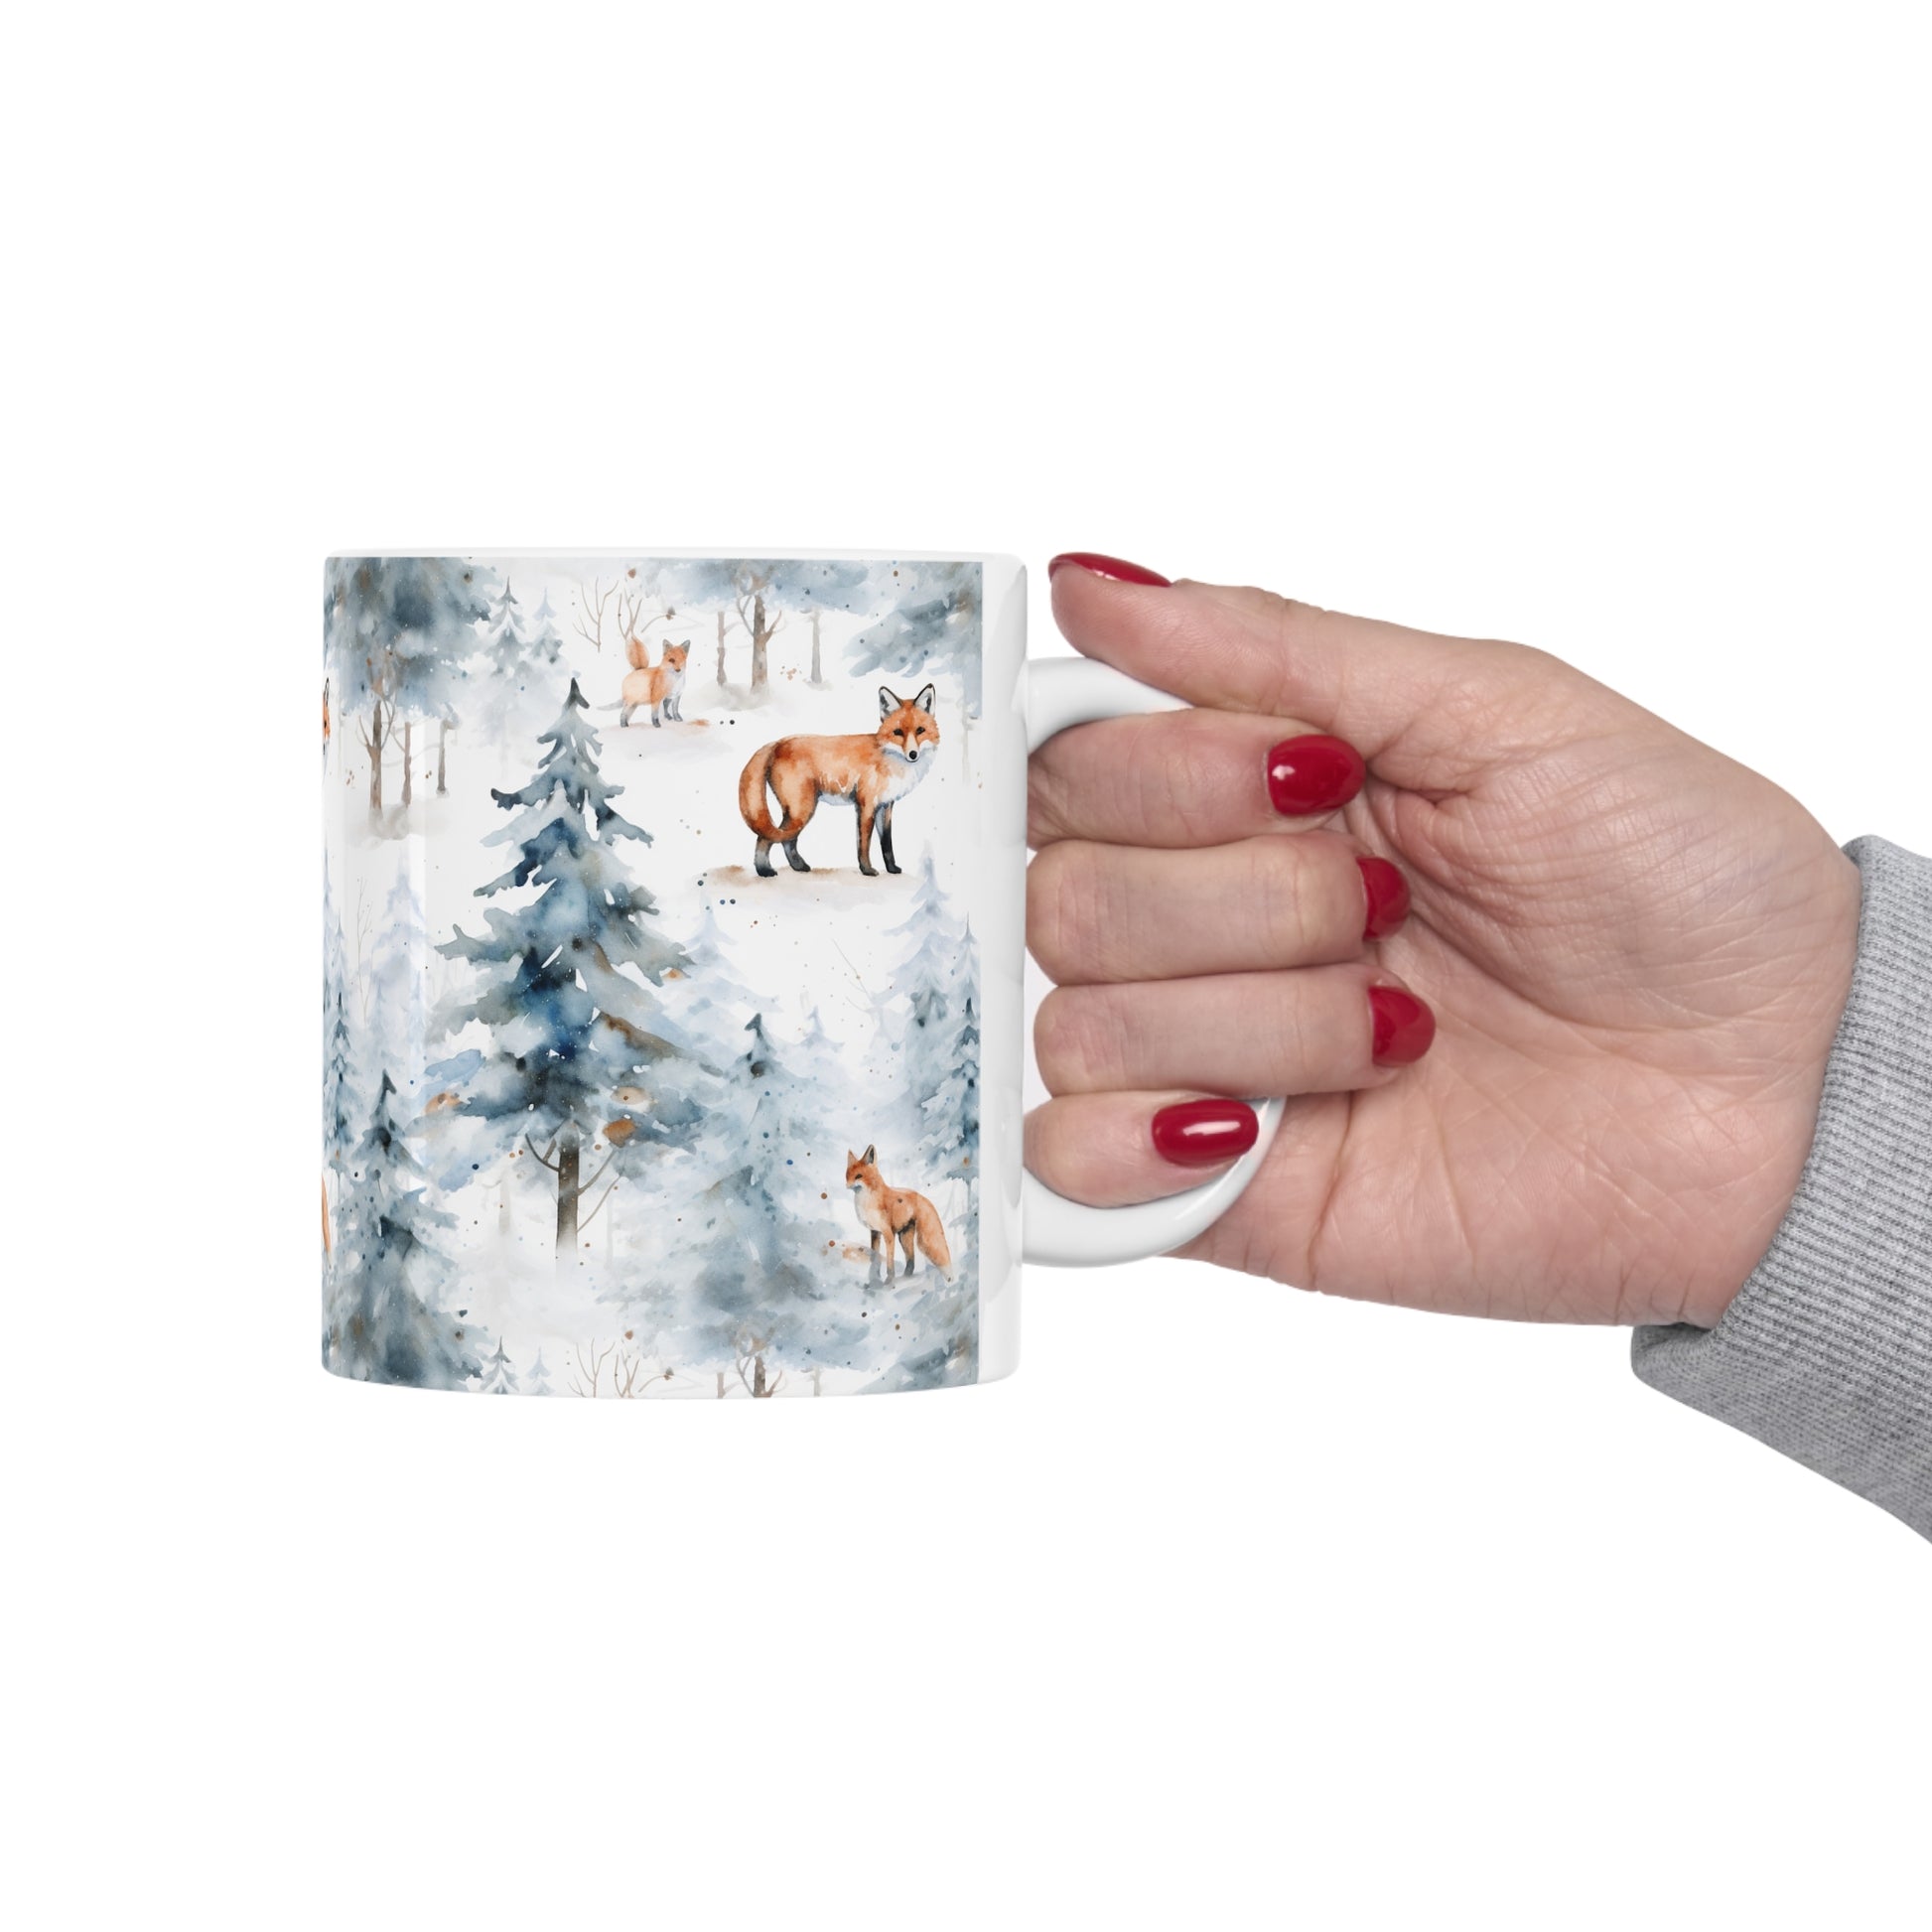 Creature Cups FOX Ceramic Cup (11 Ounce, Red Orange) - Hidden Woodland  Animal Inside Mug - Holiday, Birthday, Housewarming Gift for Coffee & Tea  Lovers